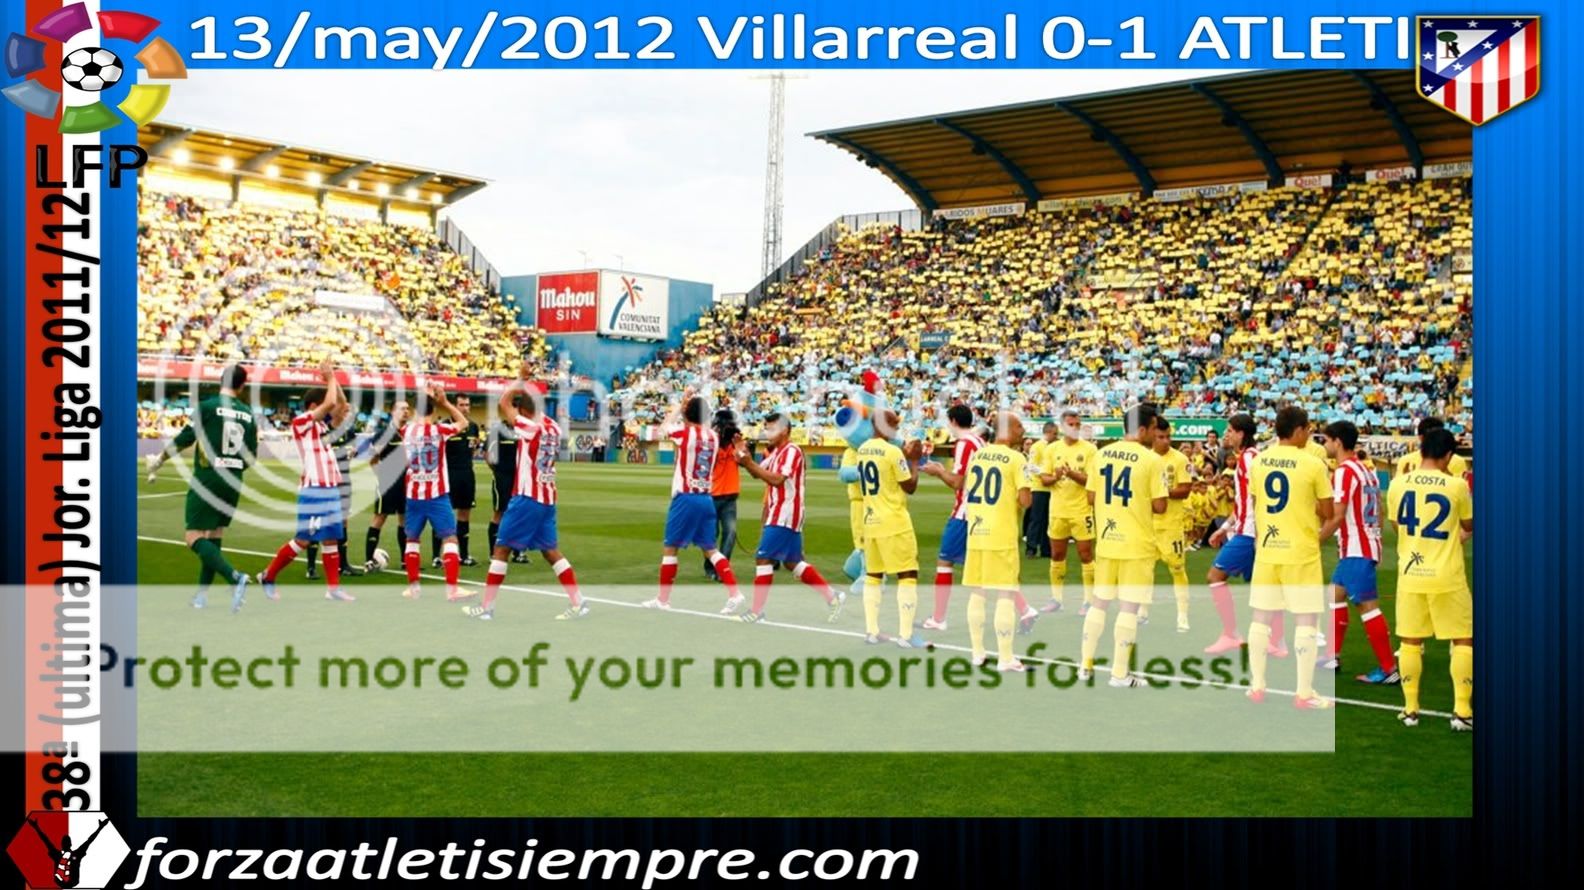 38ª Jor. Liga 2011/12 Villarreal 0-1 ATLETI.-  Victoria triste para el ... 004zCopiar